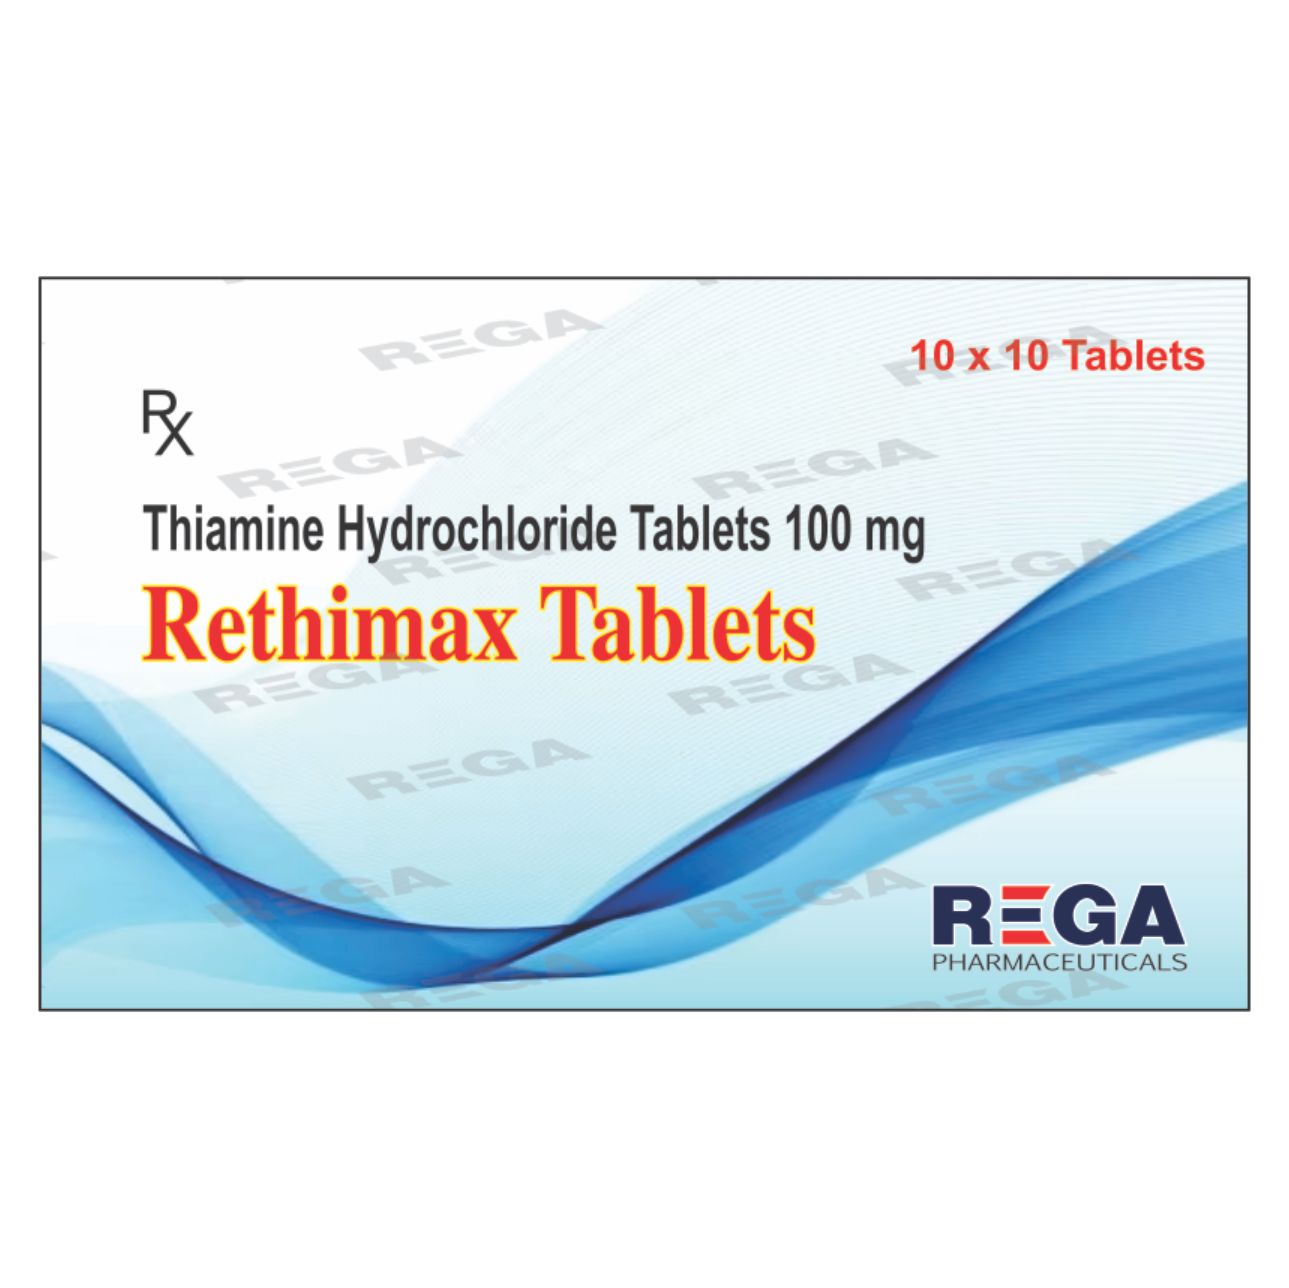 Thiamine Hydrochloride Tablets 100 mg